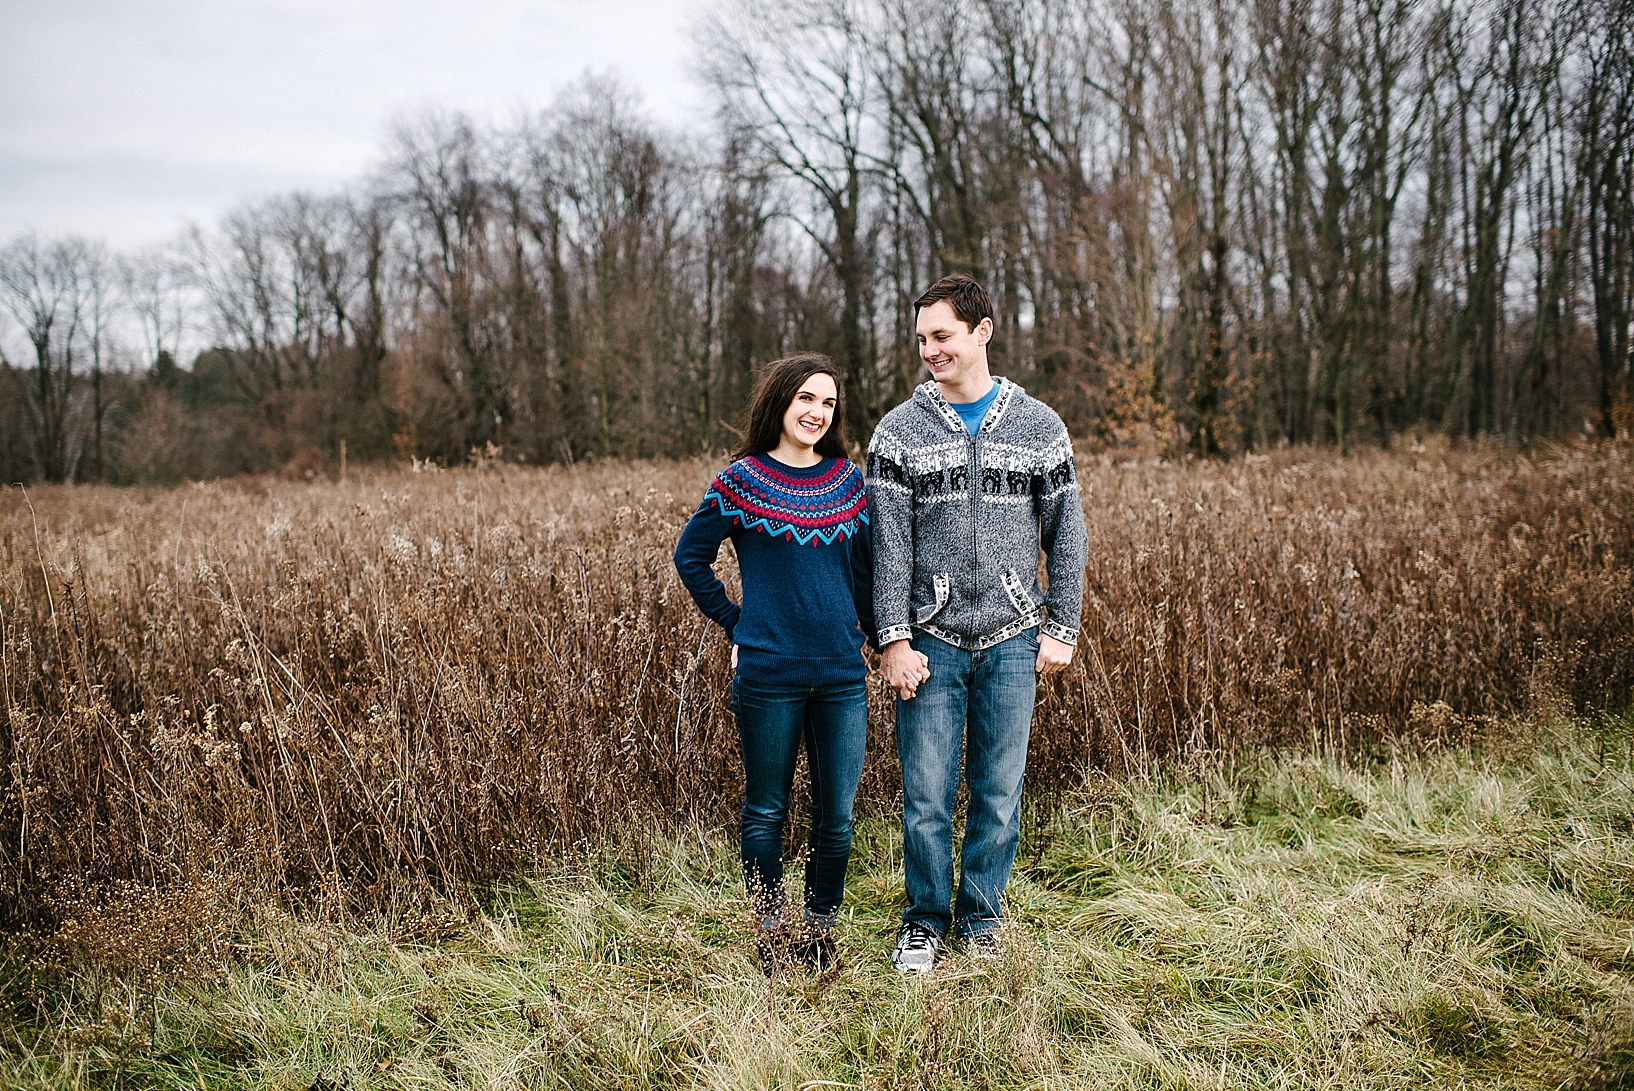 guy in grey sweater and girl in blue sweater standing side by side in field in winter